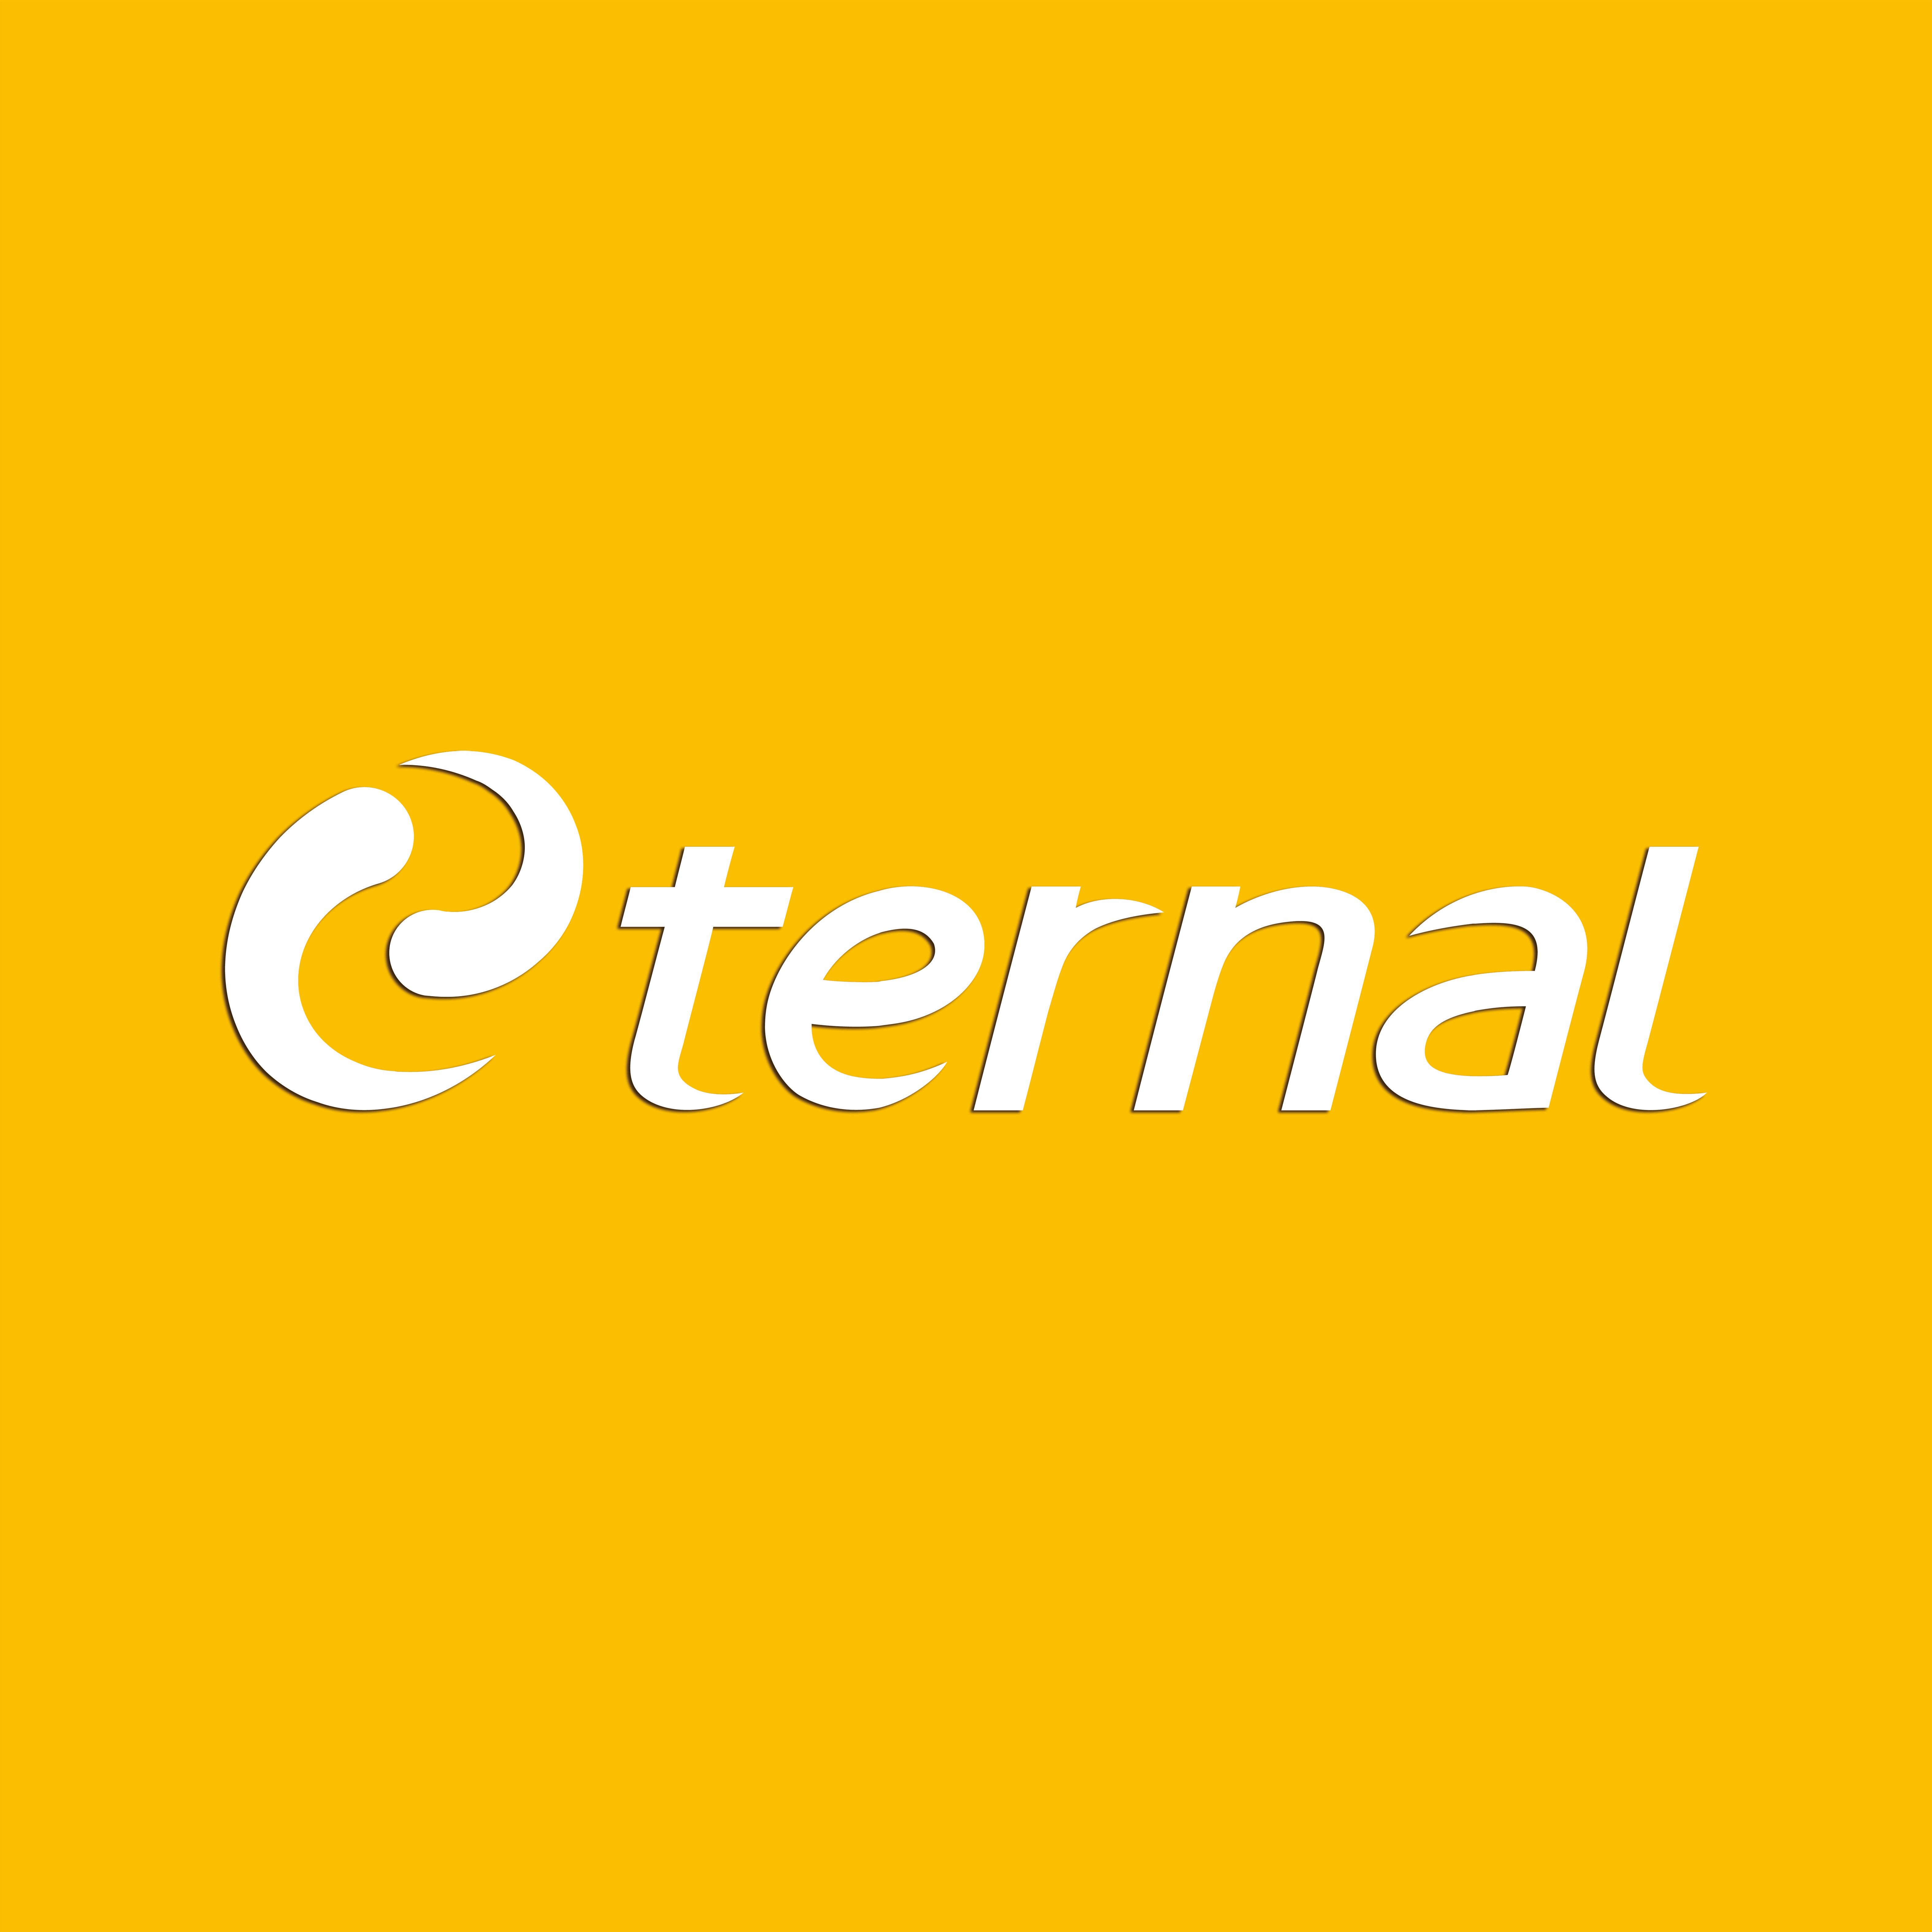 ETERNAL(GUANGDONG)TECH ELECTRIC CO., LTD